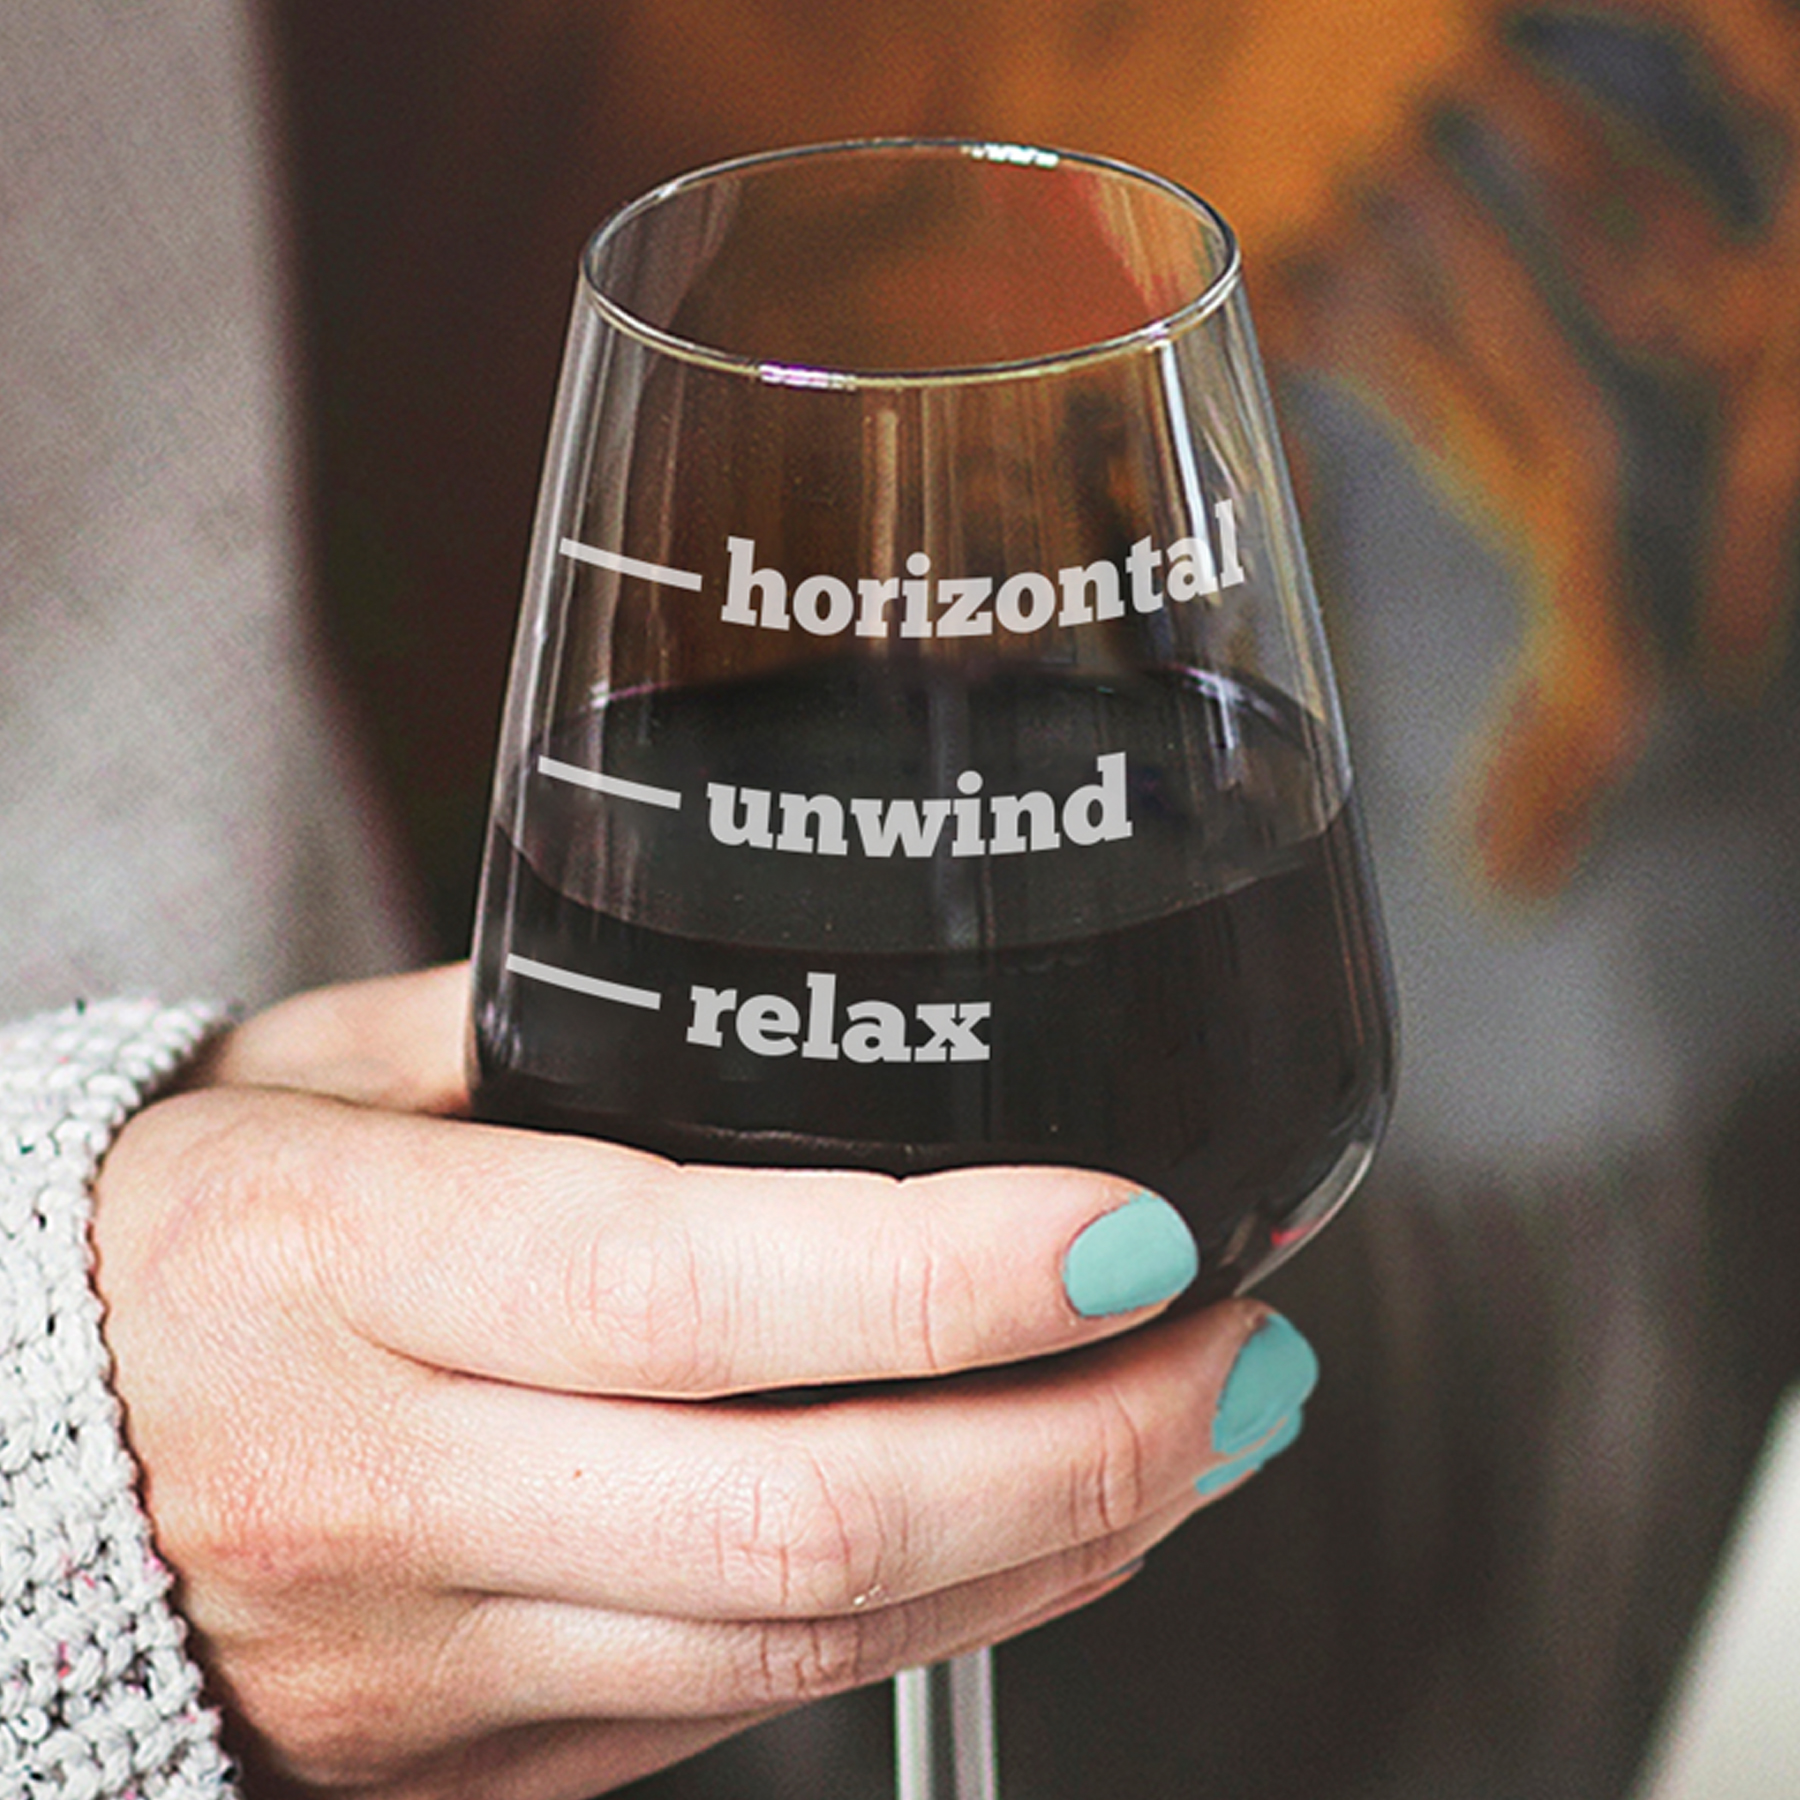 relax wine glass